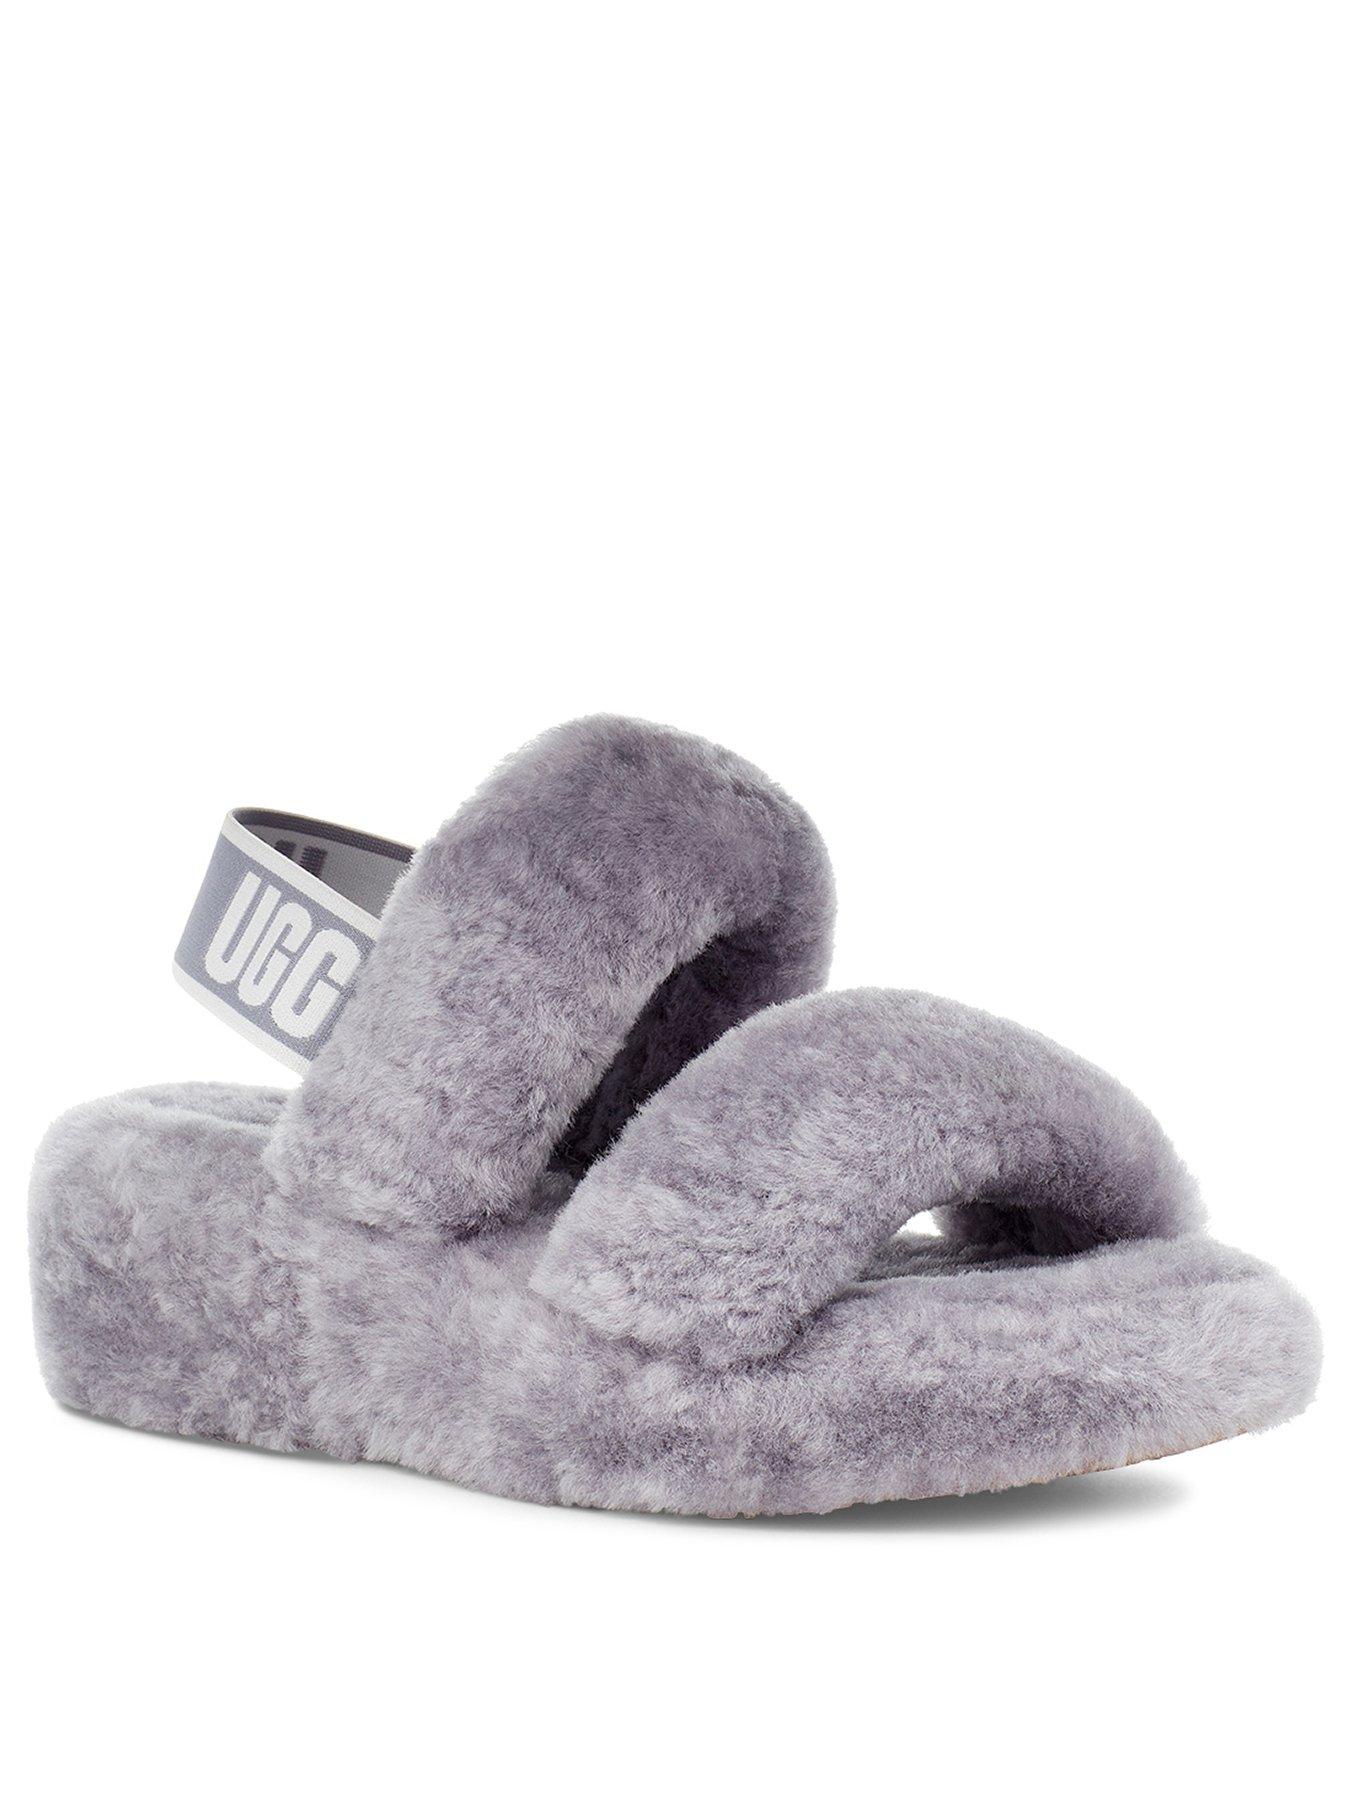 light purple ugg slippers